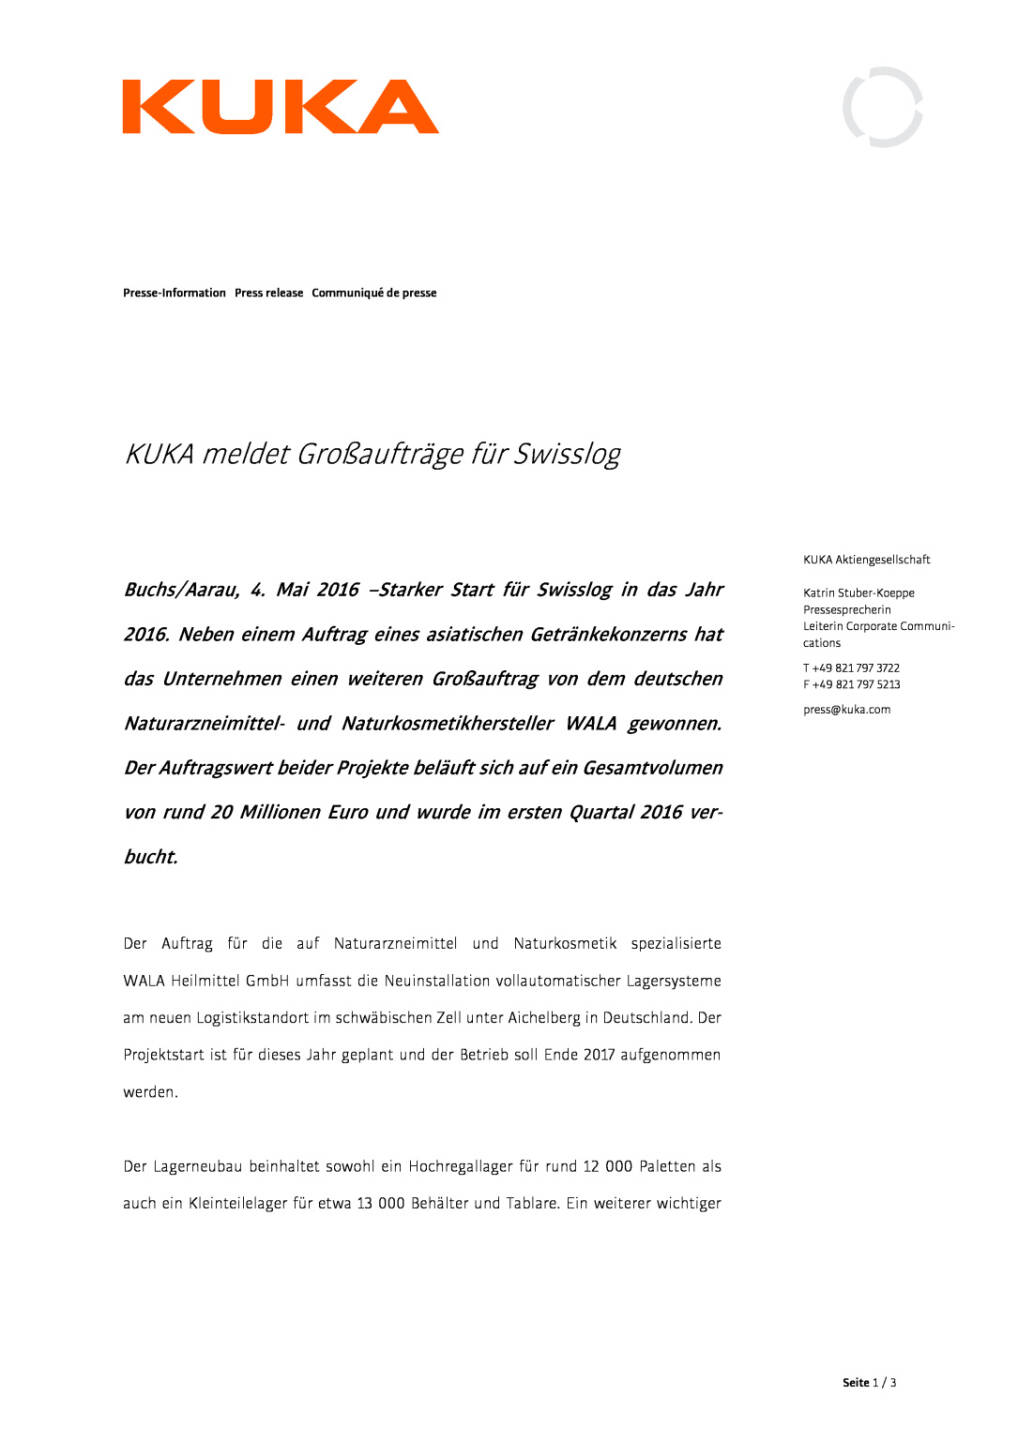 Kuka: Großaufträge für Swisslog, Seite 1/3, komplettes Dokument unter http://boerse-social.com/static/uploads/file_999_kuka_grossaufträge_für_swisslog.pdf